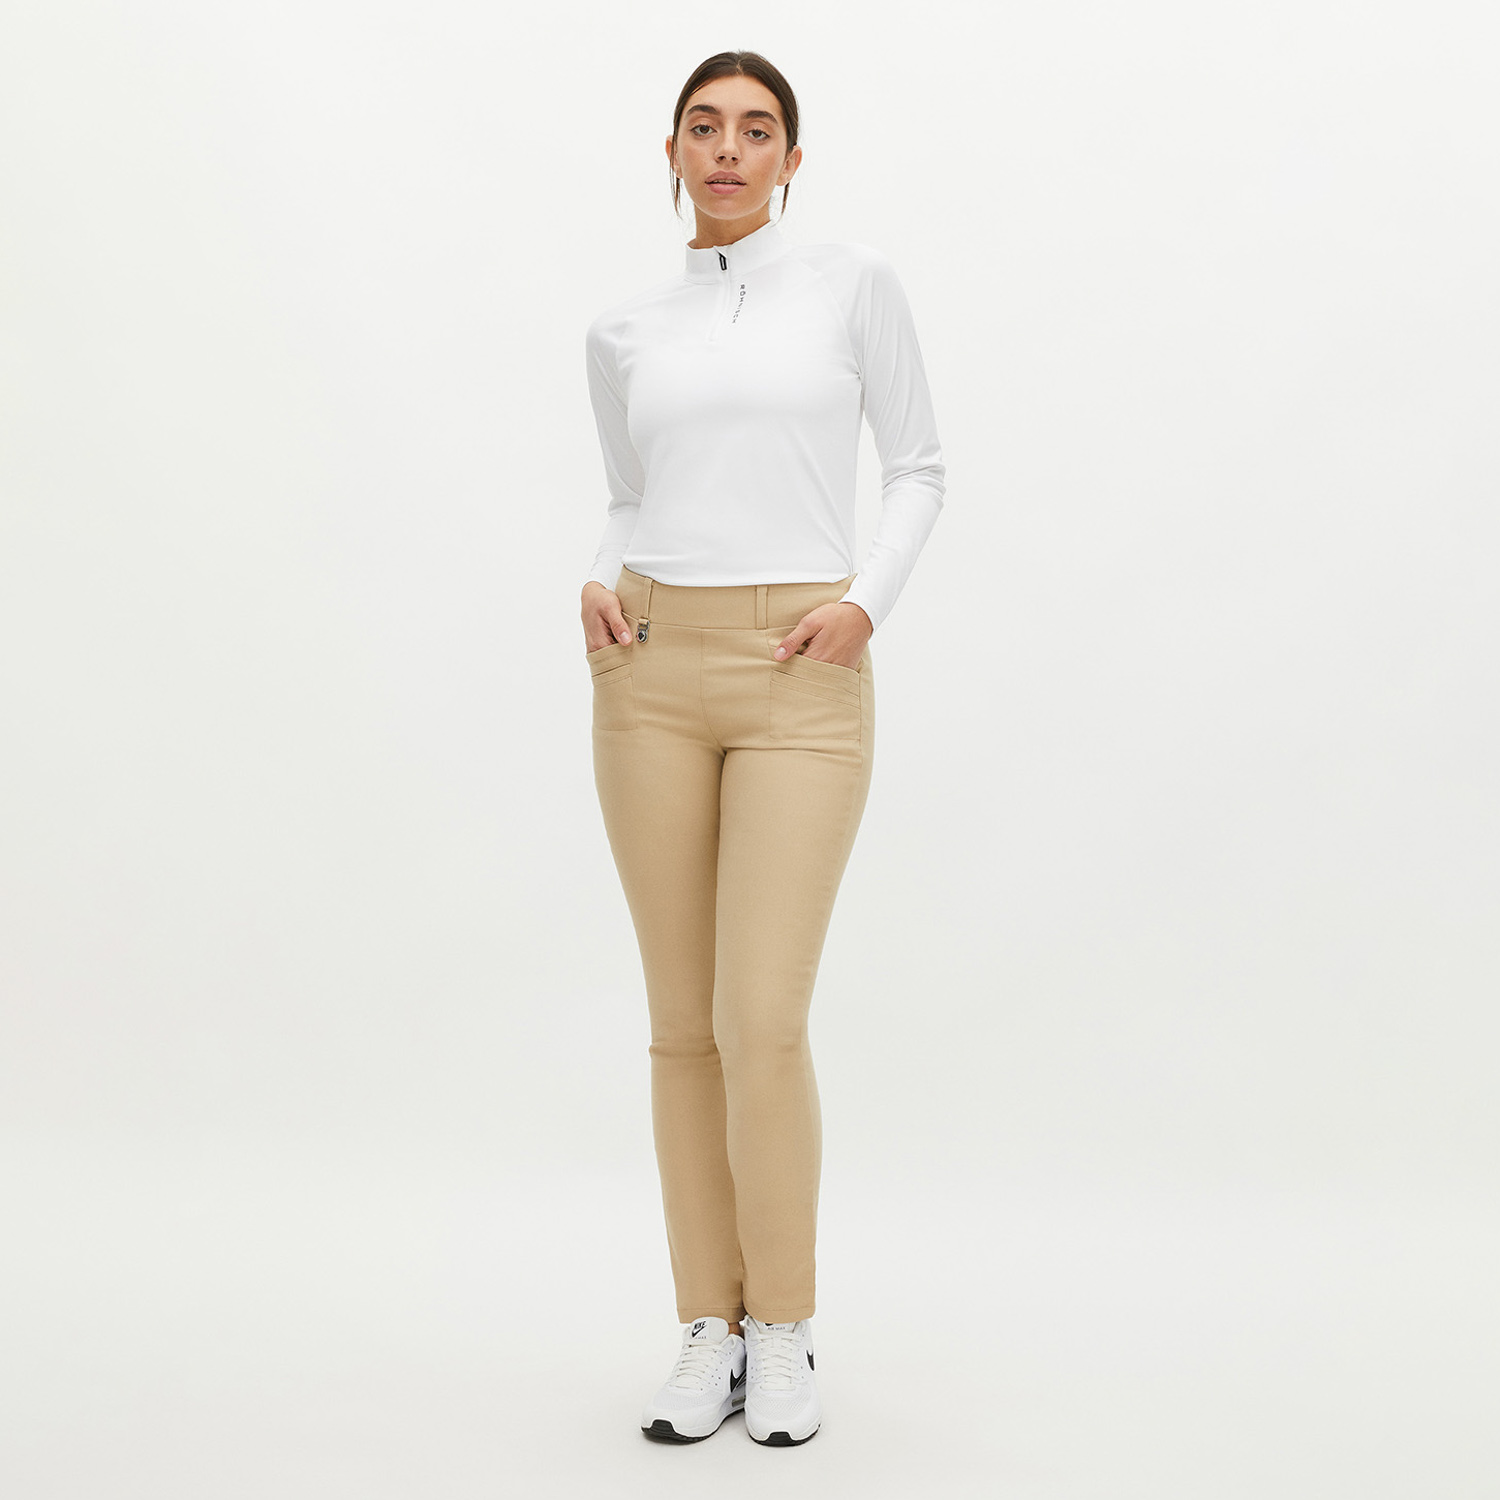 mosingle Women's Walking Trousers Cargo Pants Quick Dry UPF 50 Travel Golf  Pants Lightweight Camping Work Pants Zipper Pockets #6608-Grey-XS :  Amazon.co.uk: Fashion